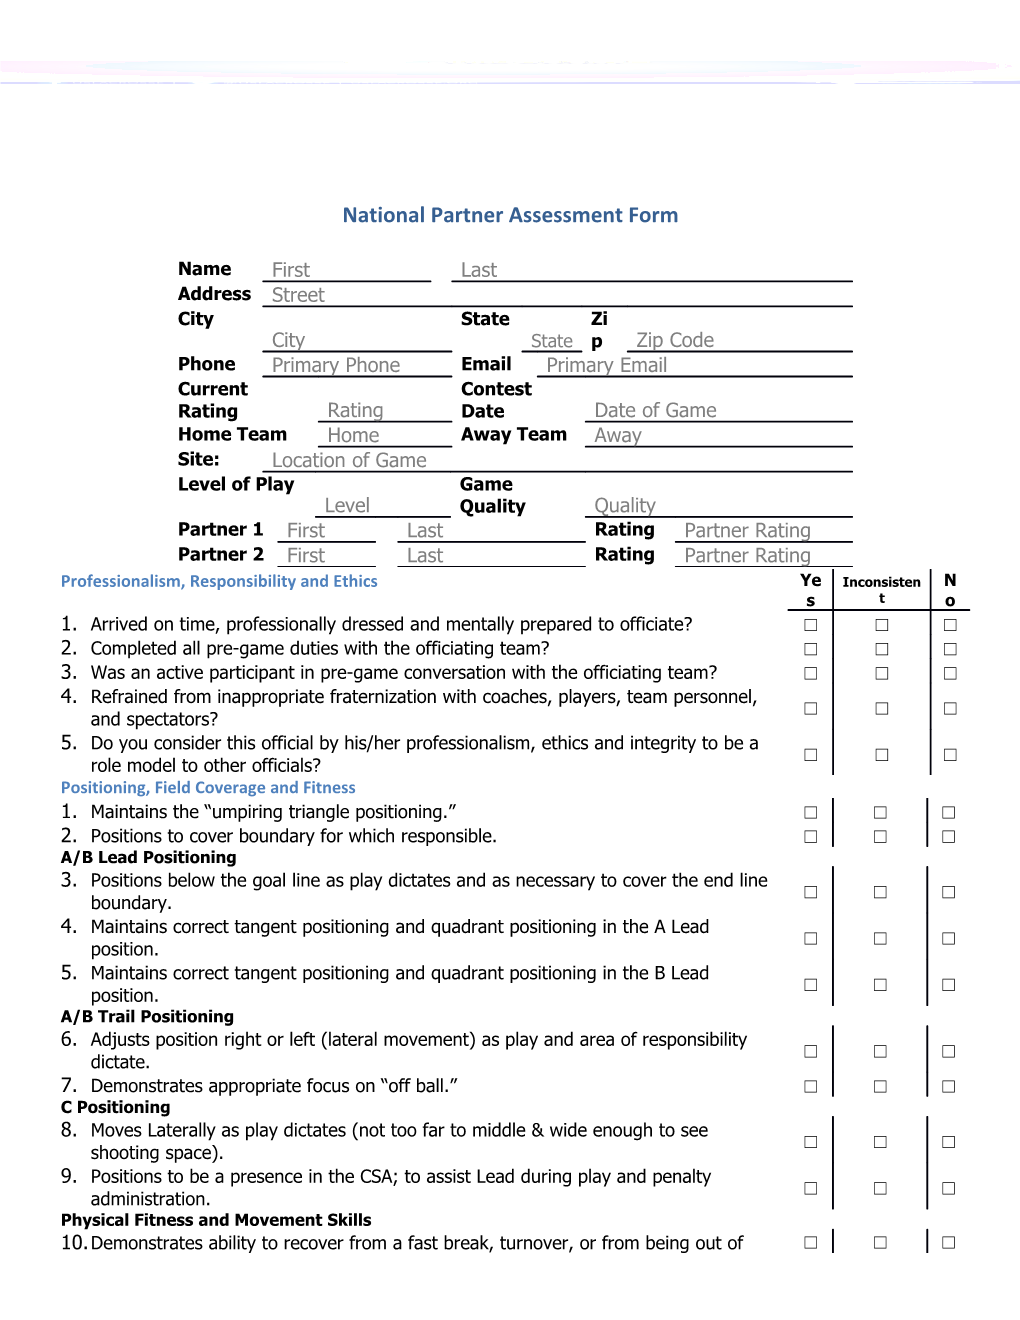 National Partner Assessment Form